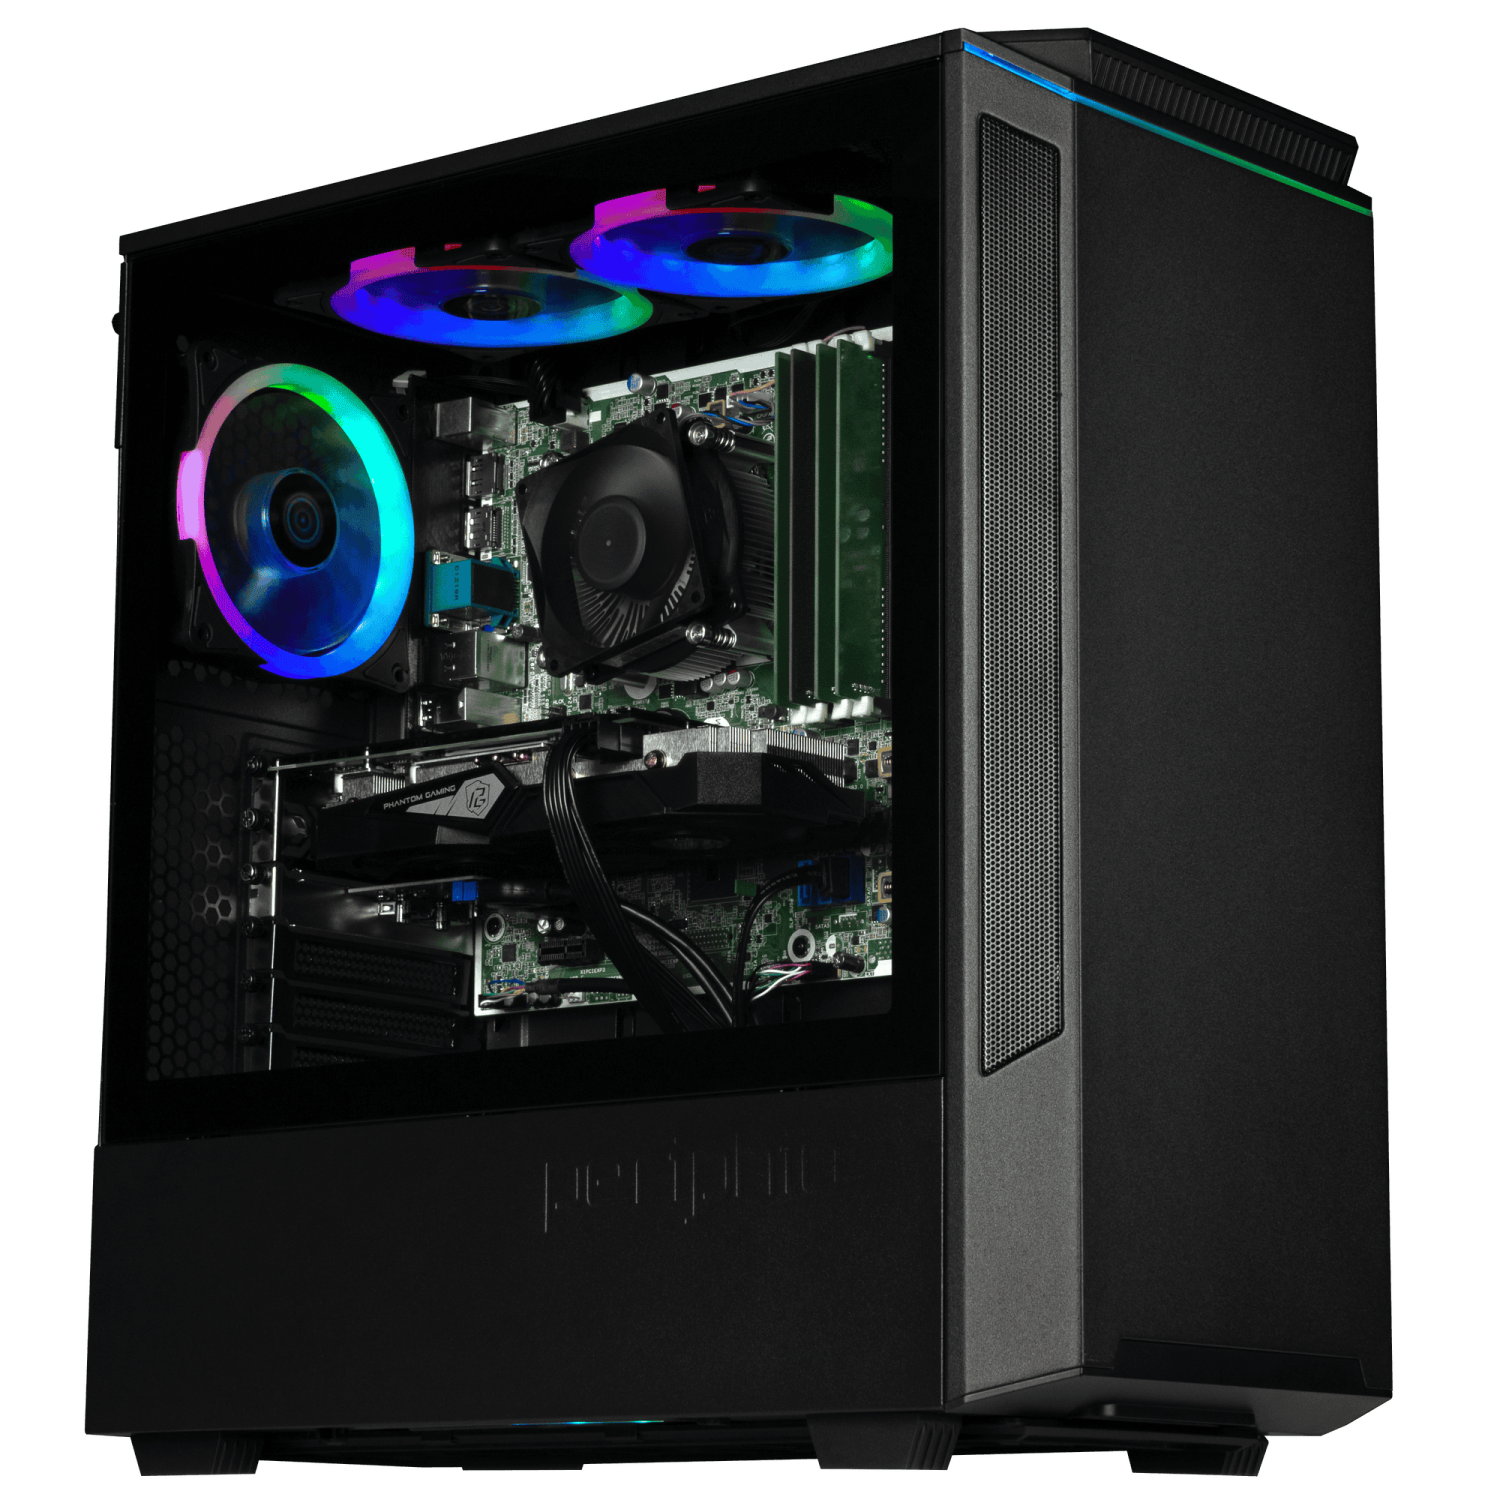 Refurbished (Excellent) Periphio Ghoul Prebuilt Gaming PC - Radeon RX 560 (4GB) Graphics| Intel Core i5-6500 (3.6GHz Turbo)| 1TB SSD| 16GB DDR4 RAM |Win 10 Gaming Desktop|WiFi + BT